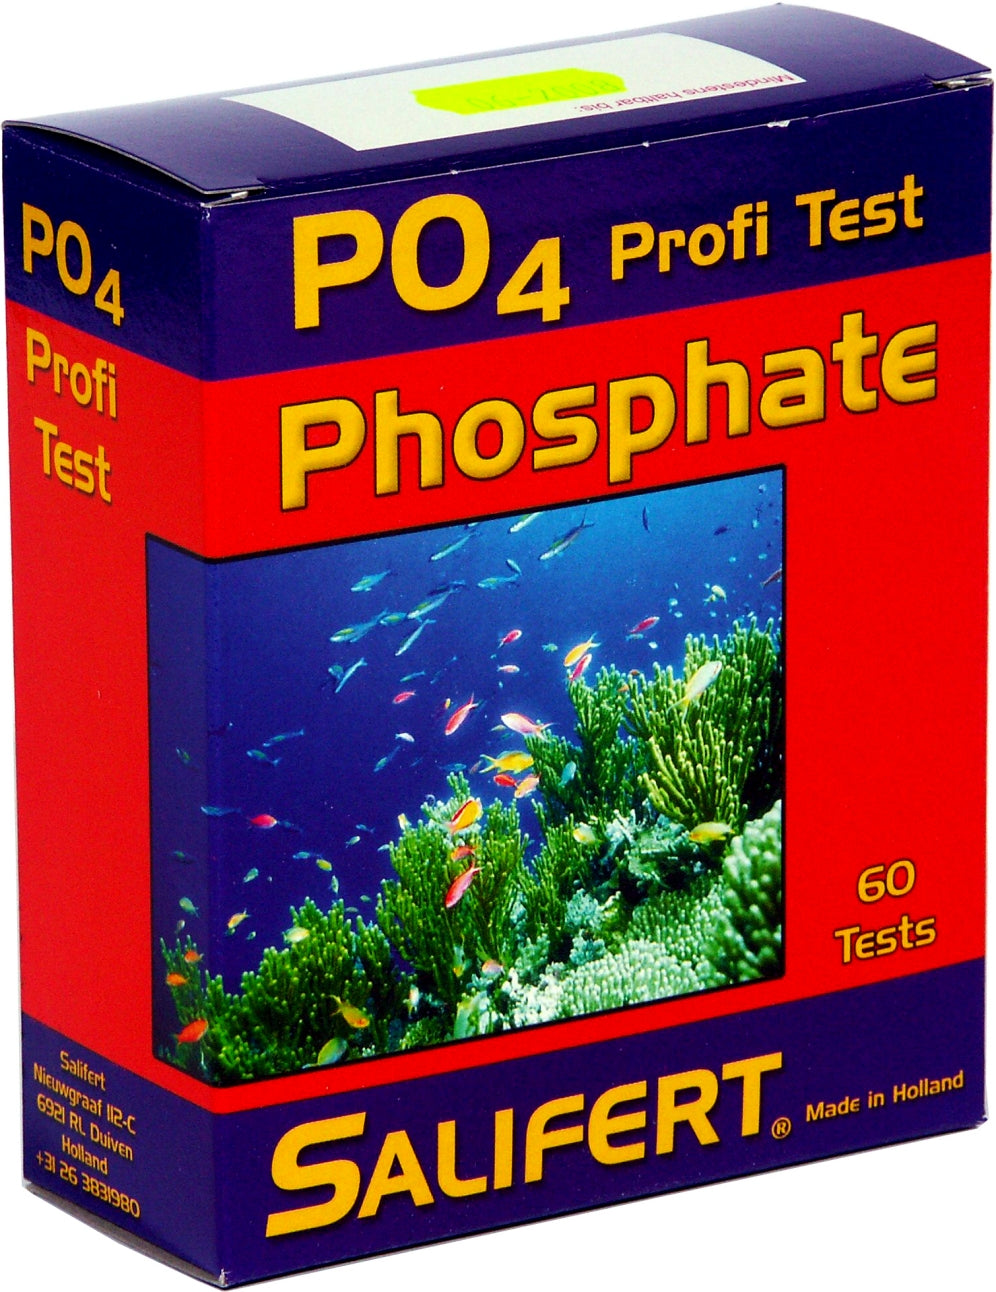 Salifert Phosphate P04 Profi Test available at Coral Passion